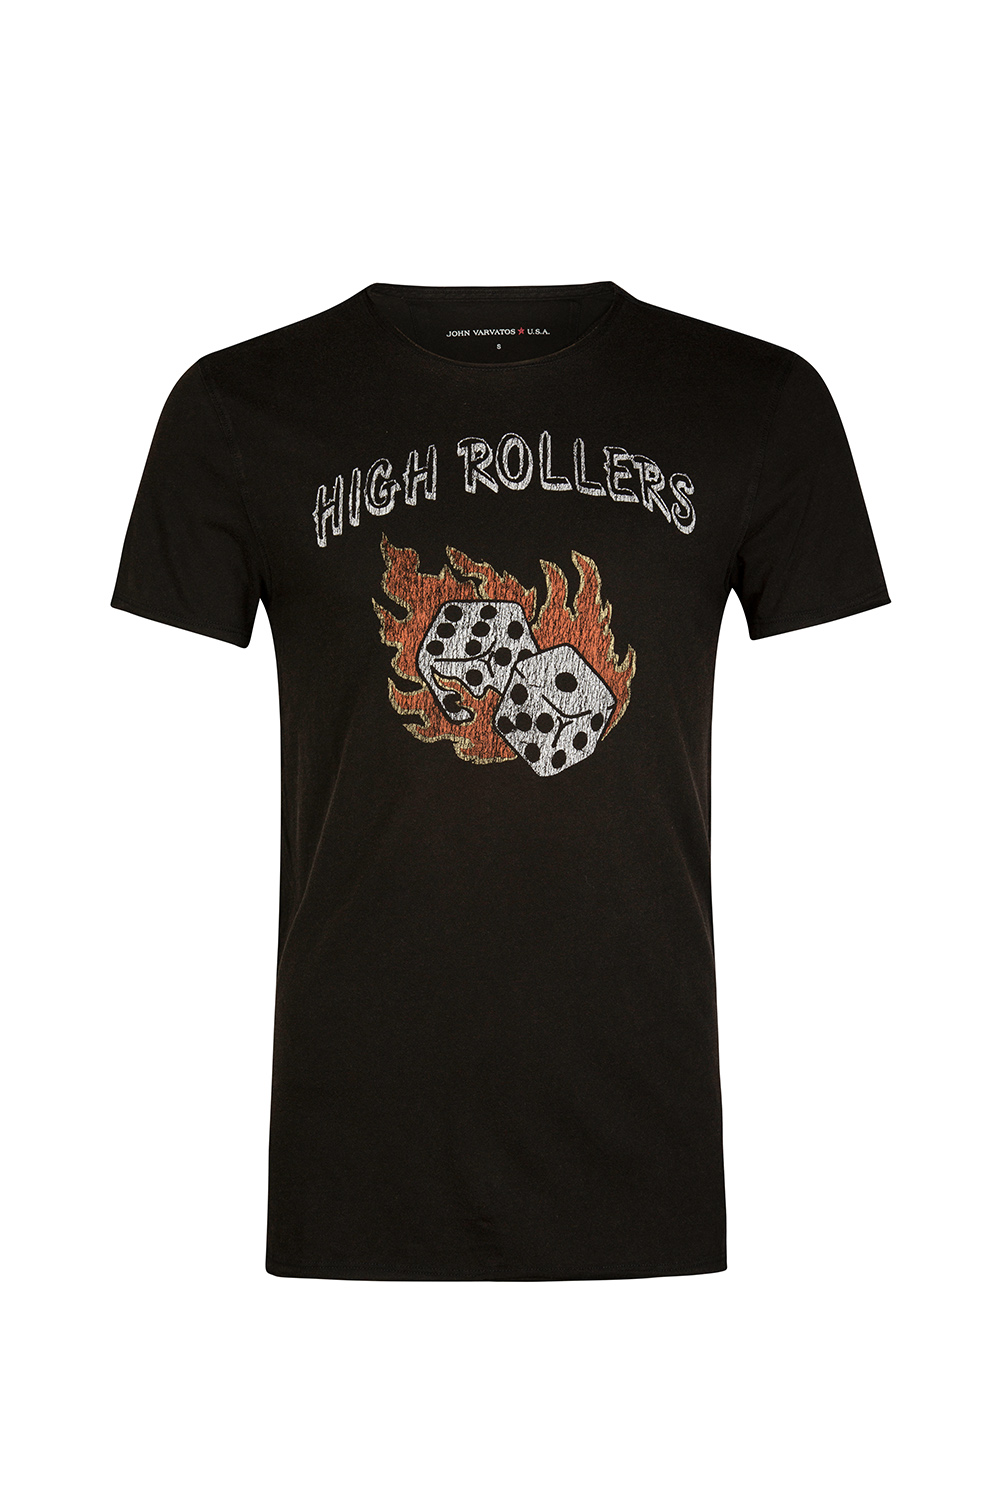 John Varvatos Men's Short Sleeve High Rollers Graphic Crew T-Shirt Black